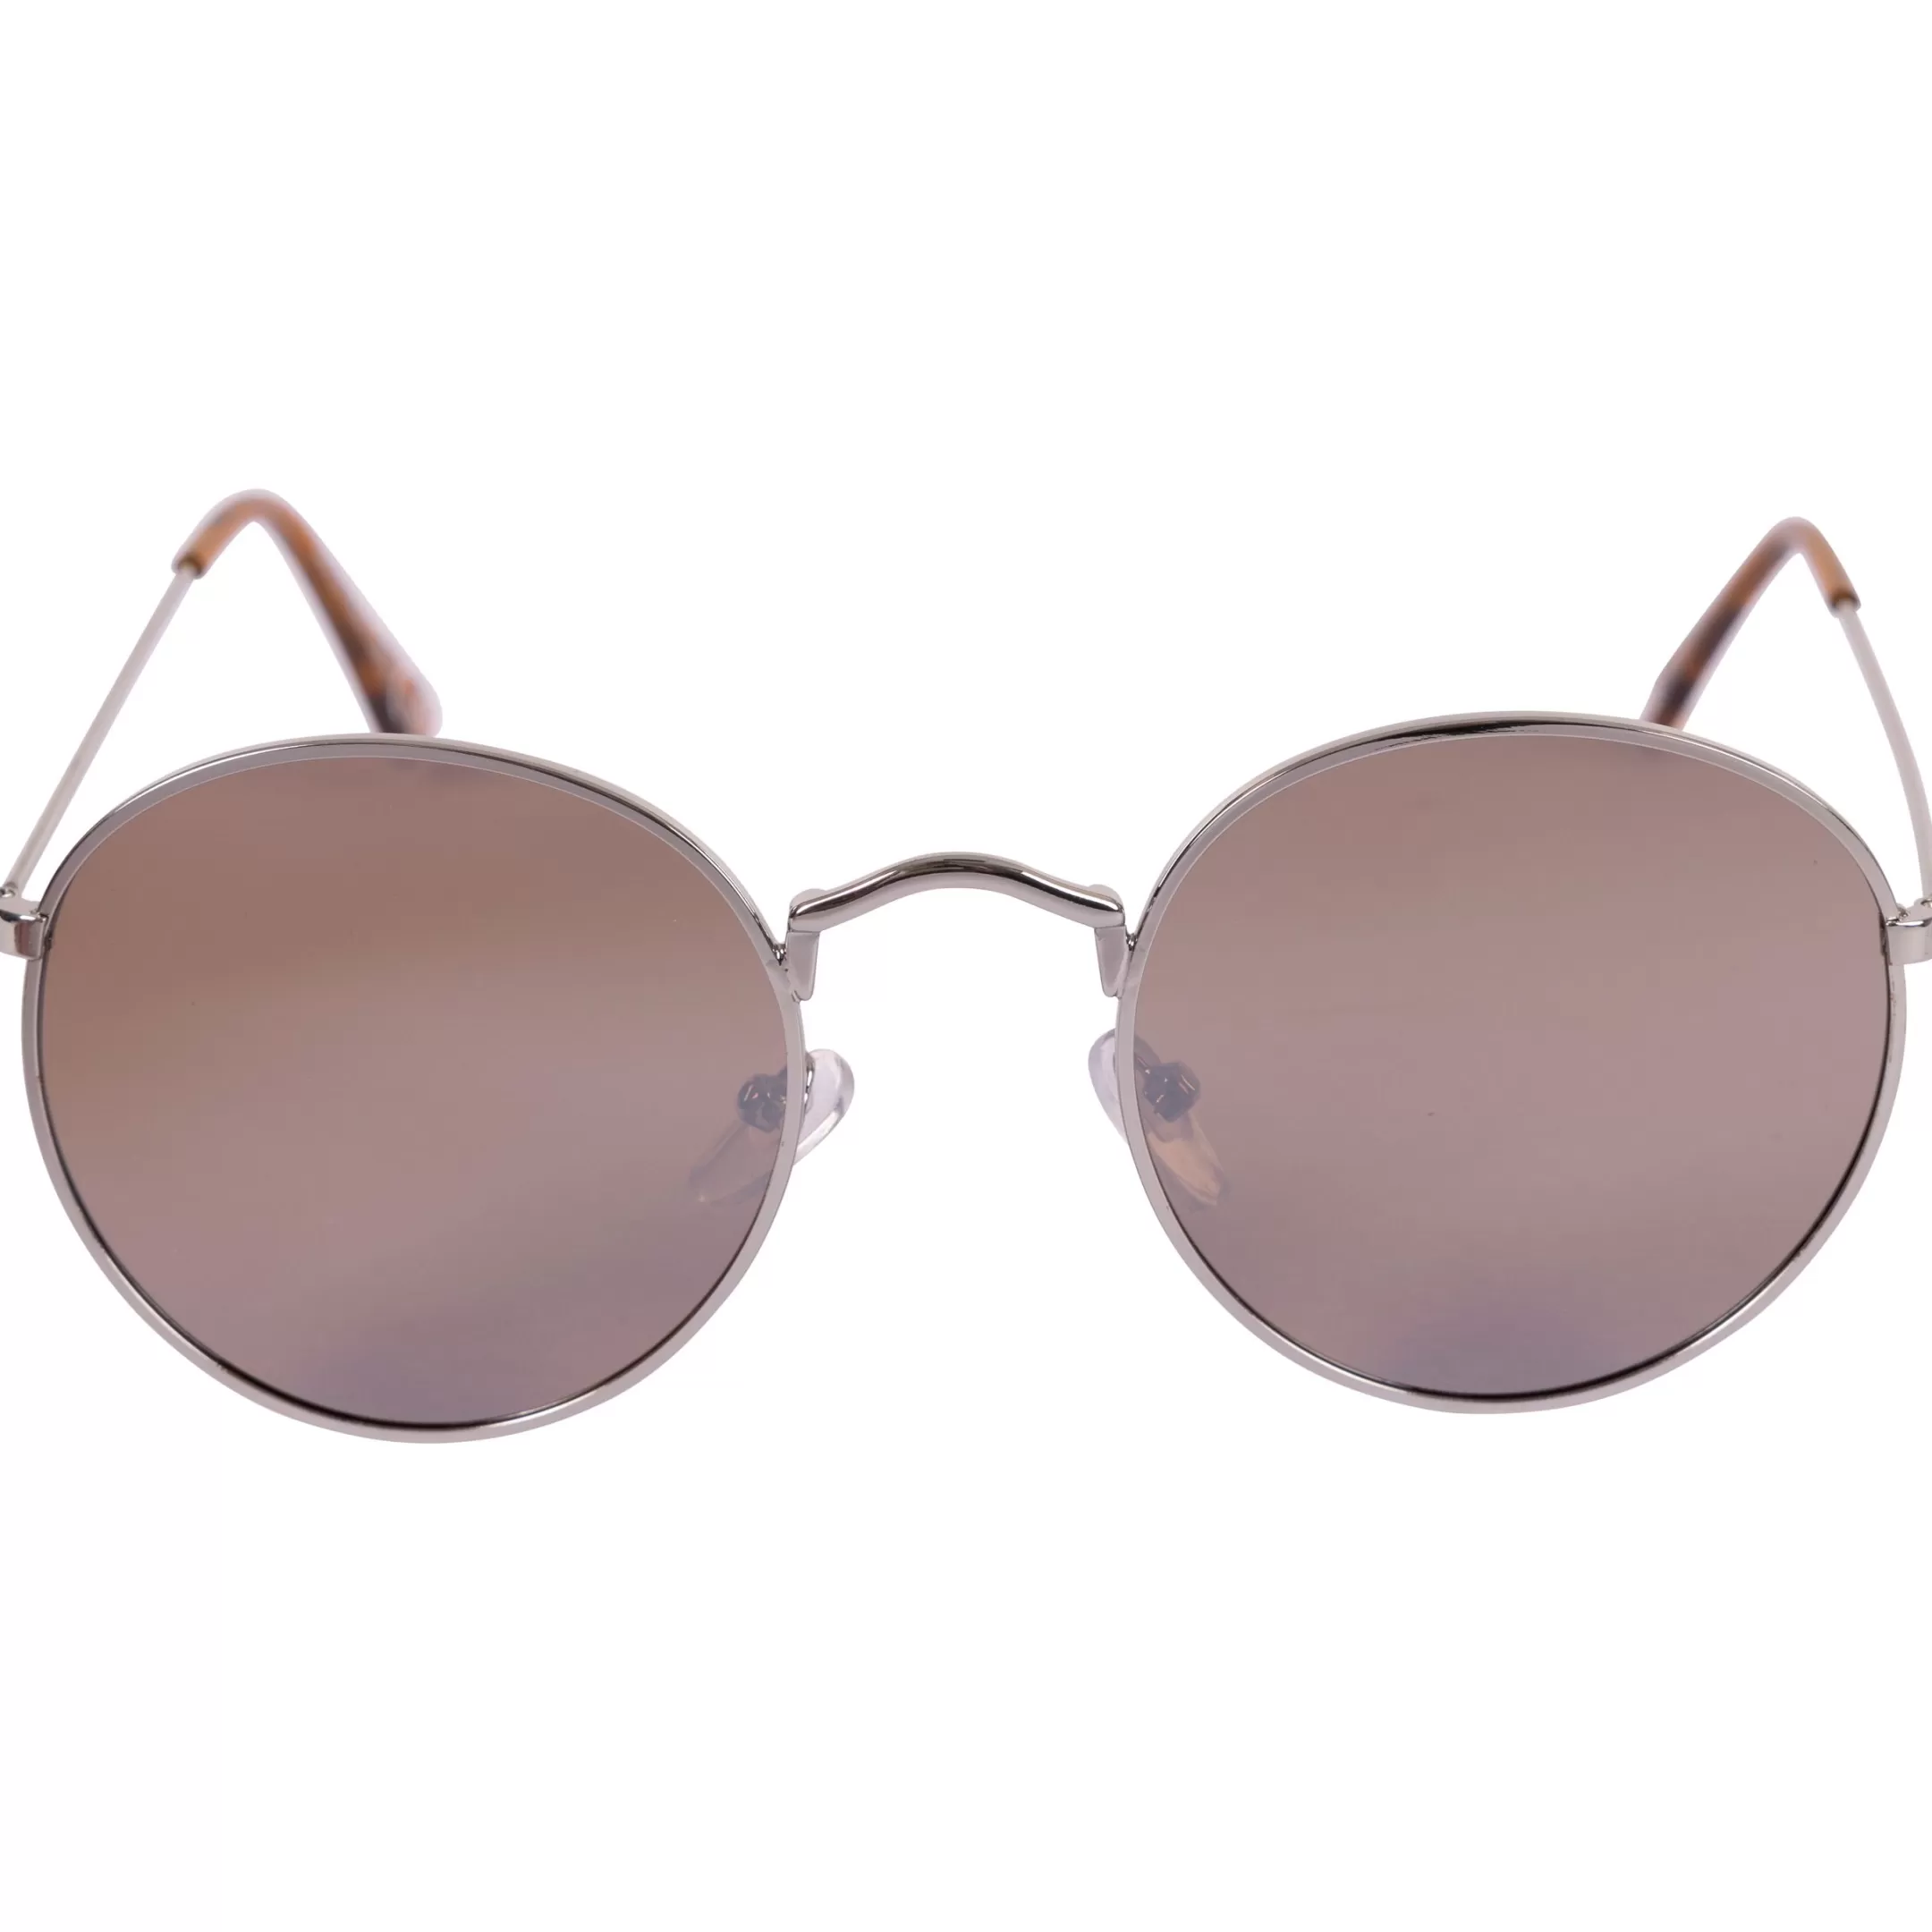 Unisex Adult Sunglasses Beaux | Trespass Cheap